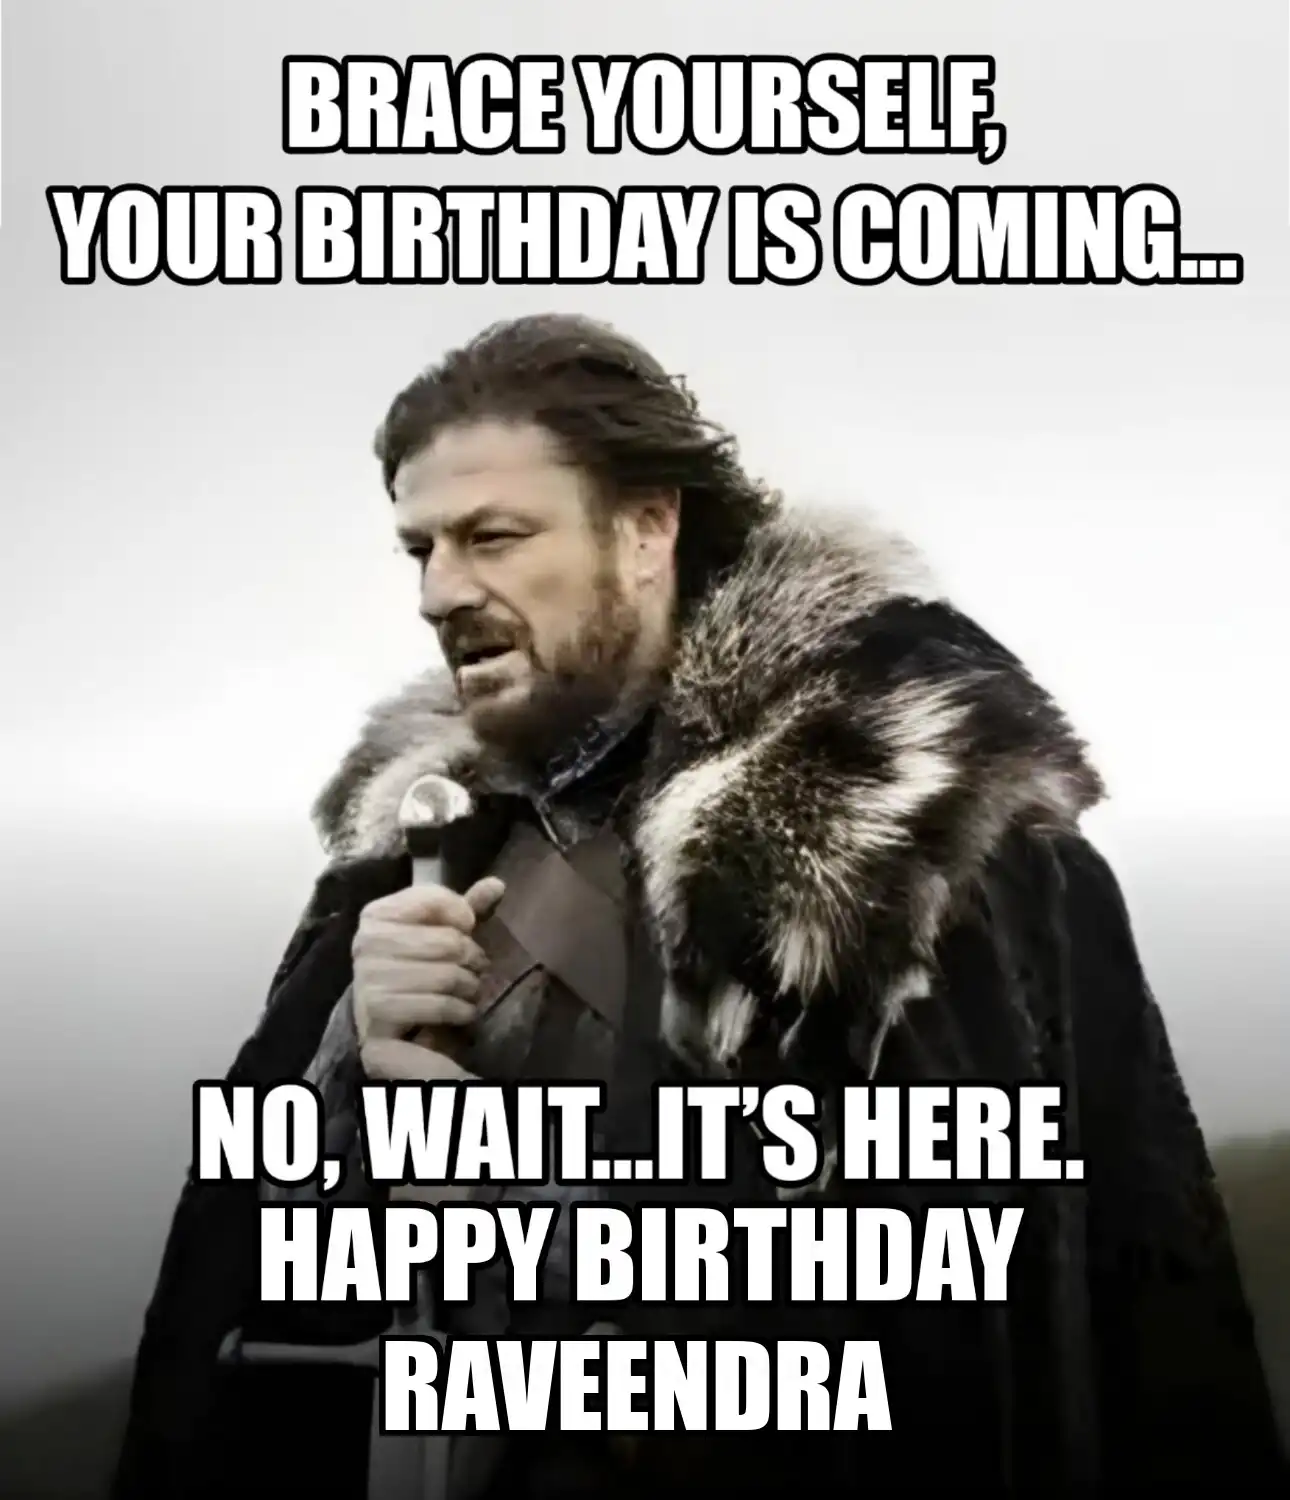 Happy Birthday Raveendra Brace Yourself Your Birthday Is Coming Meme